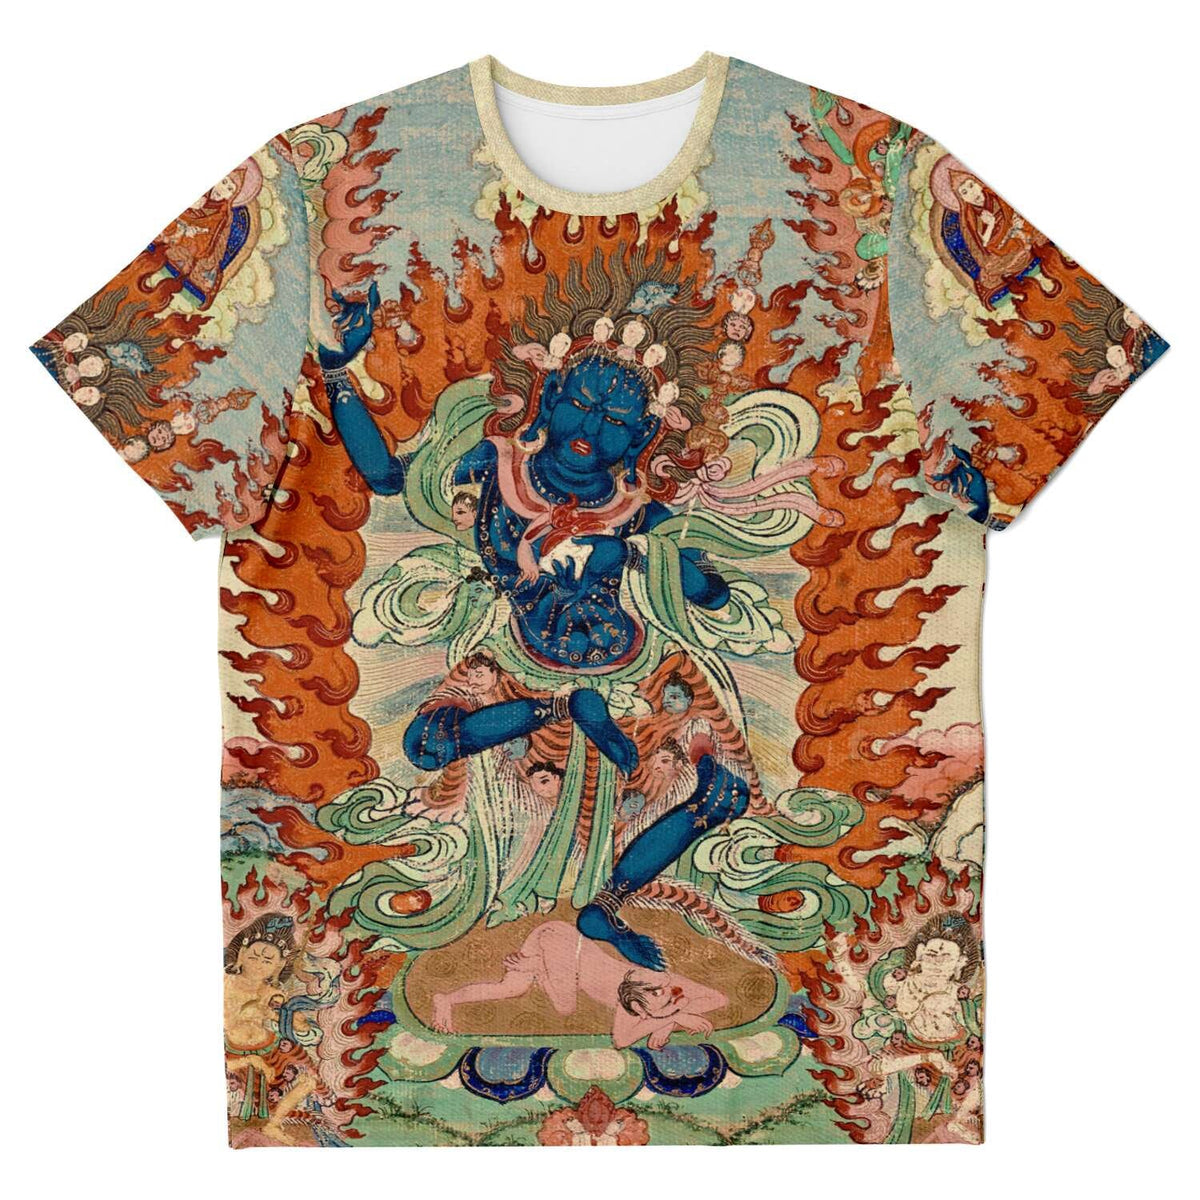 T-shirt Vajravarahi (Krodha Kali) Tibetan-Chinese Vajrayana Buddhist Tantric Goddess Thangka Antique Vintage Folk Mythology Mahayana Art Tee T-Shirt